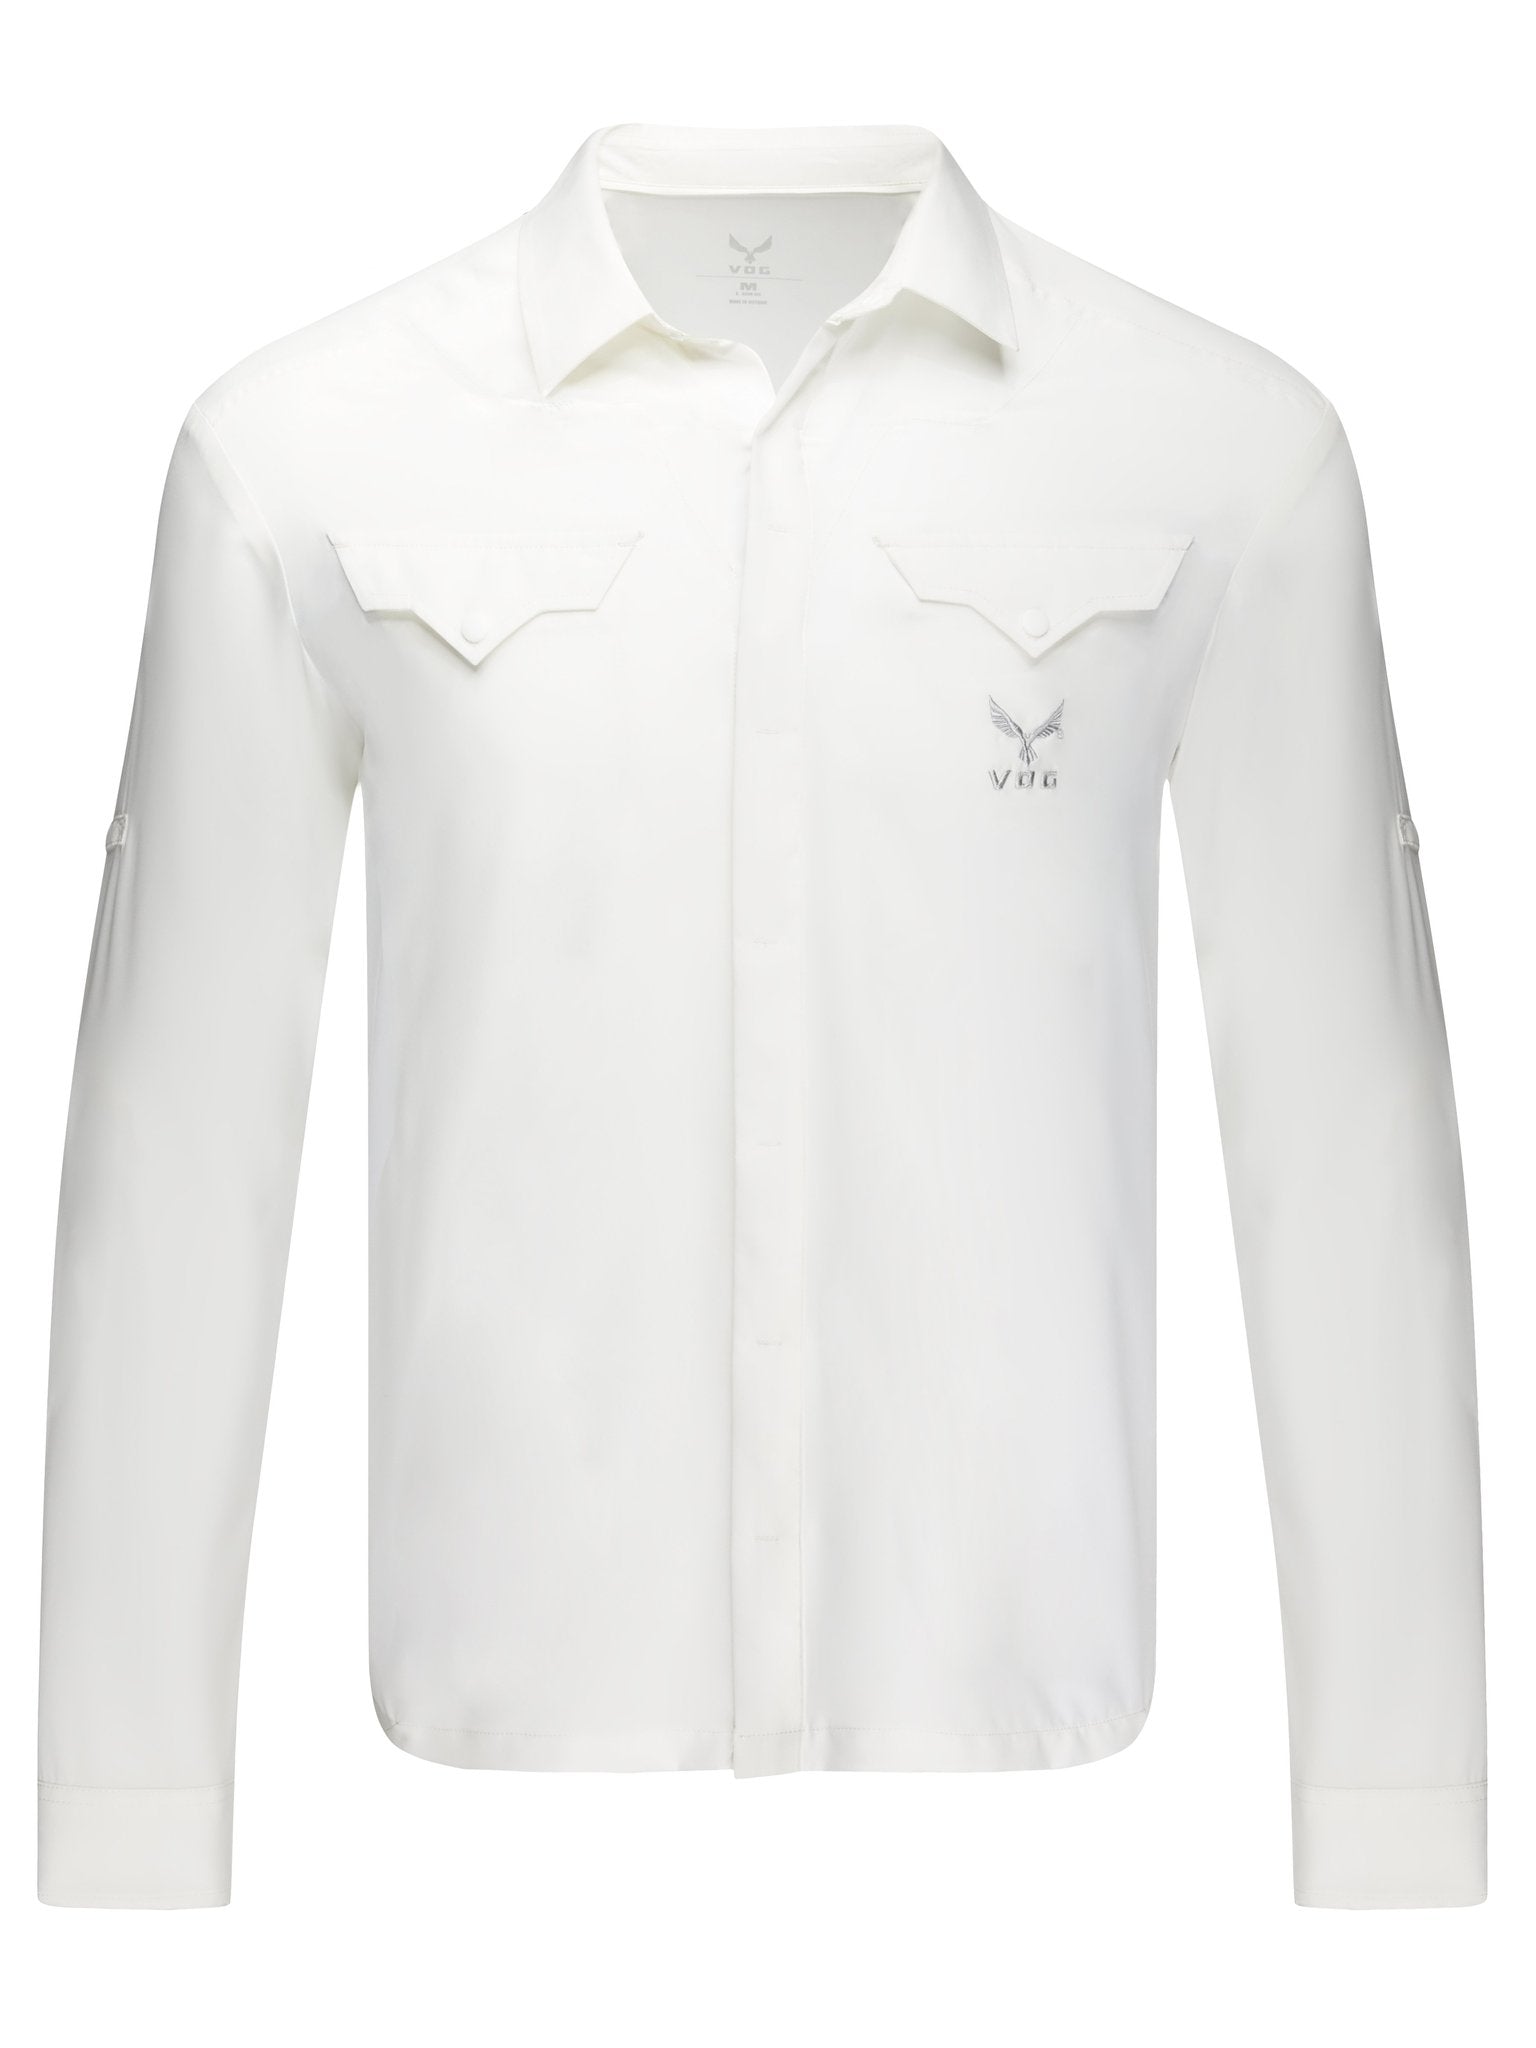 Renegade Woven Shirt - Bright White